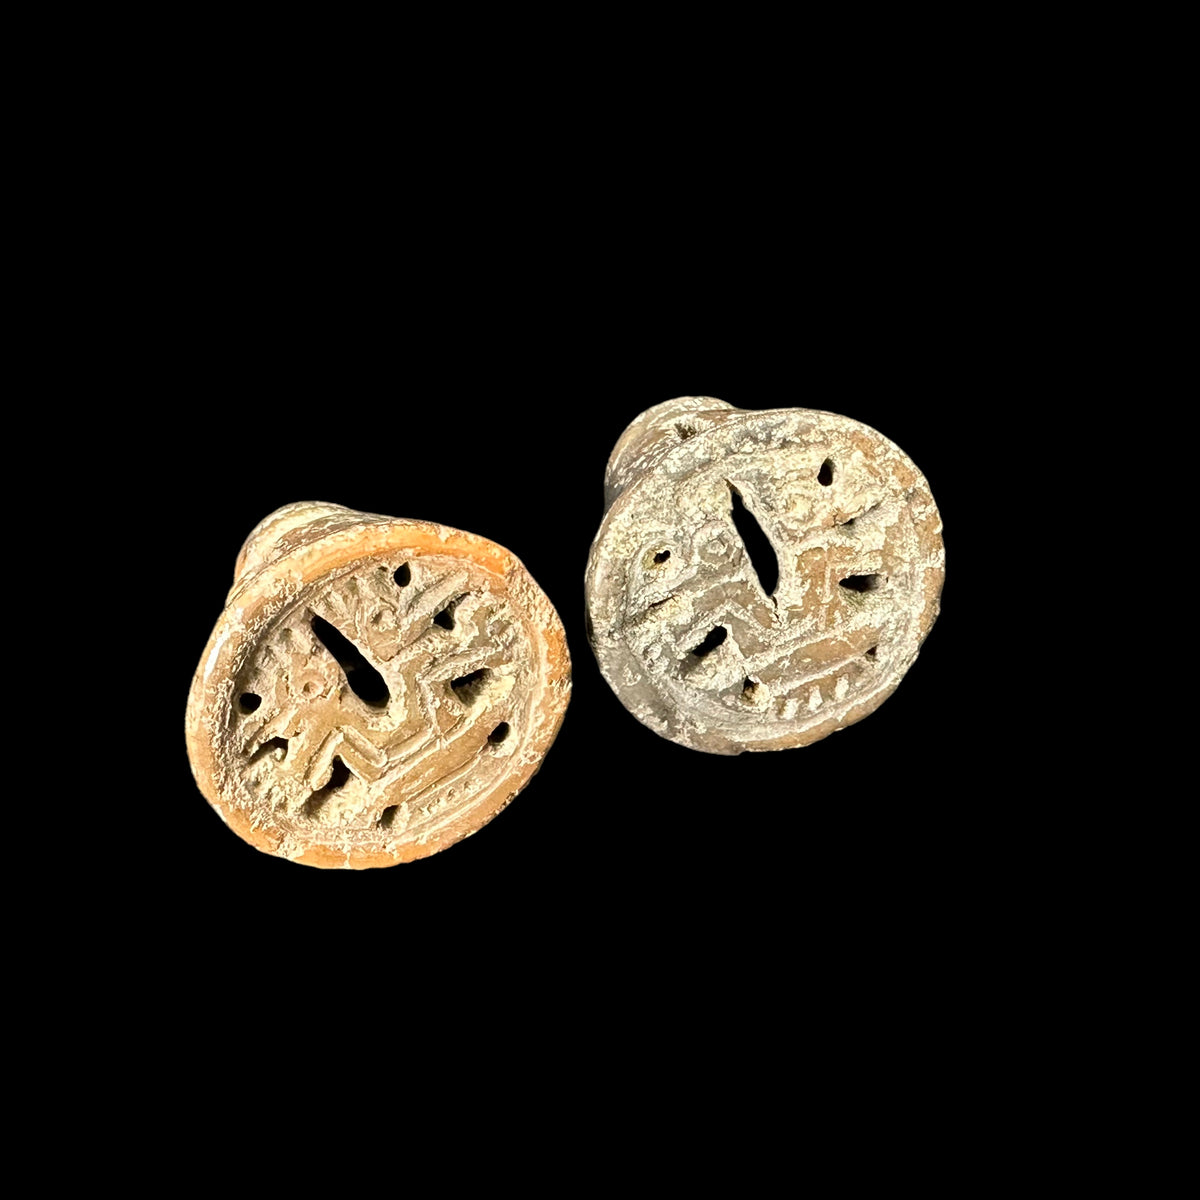 Scarce Pre-Columbian San Jeronimo ear ornaments